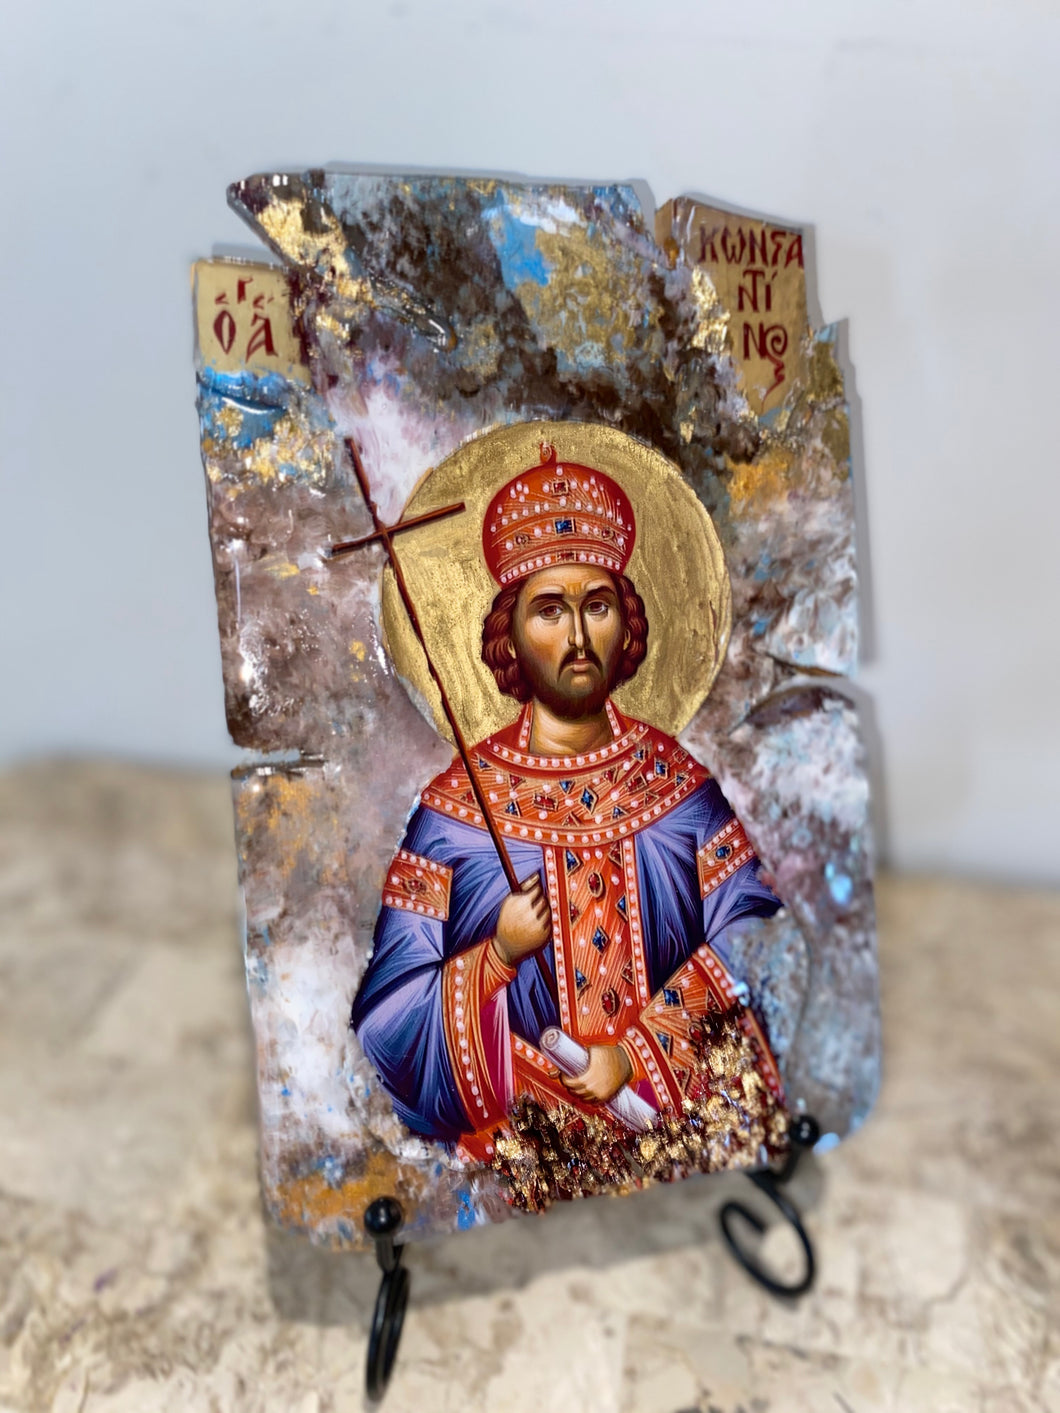 Kostantino  - religious wood epoxy resin handmade icon art - Only 1 off - Original